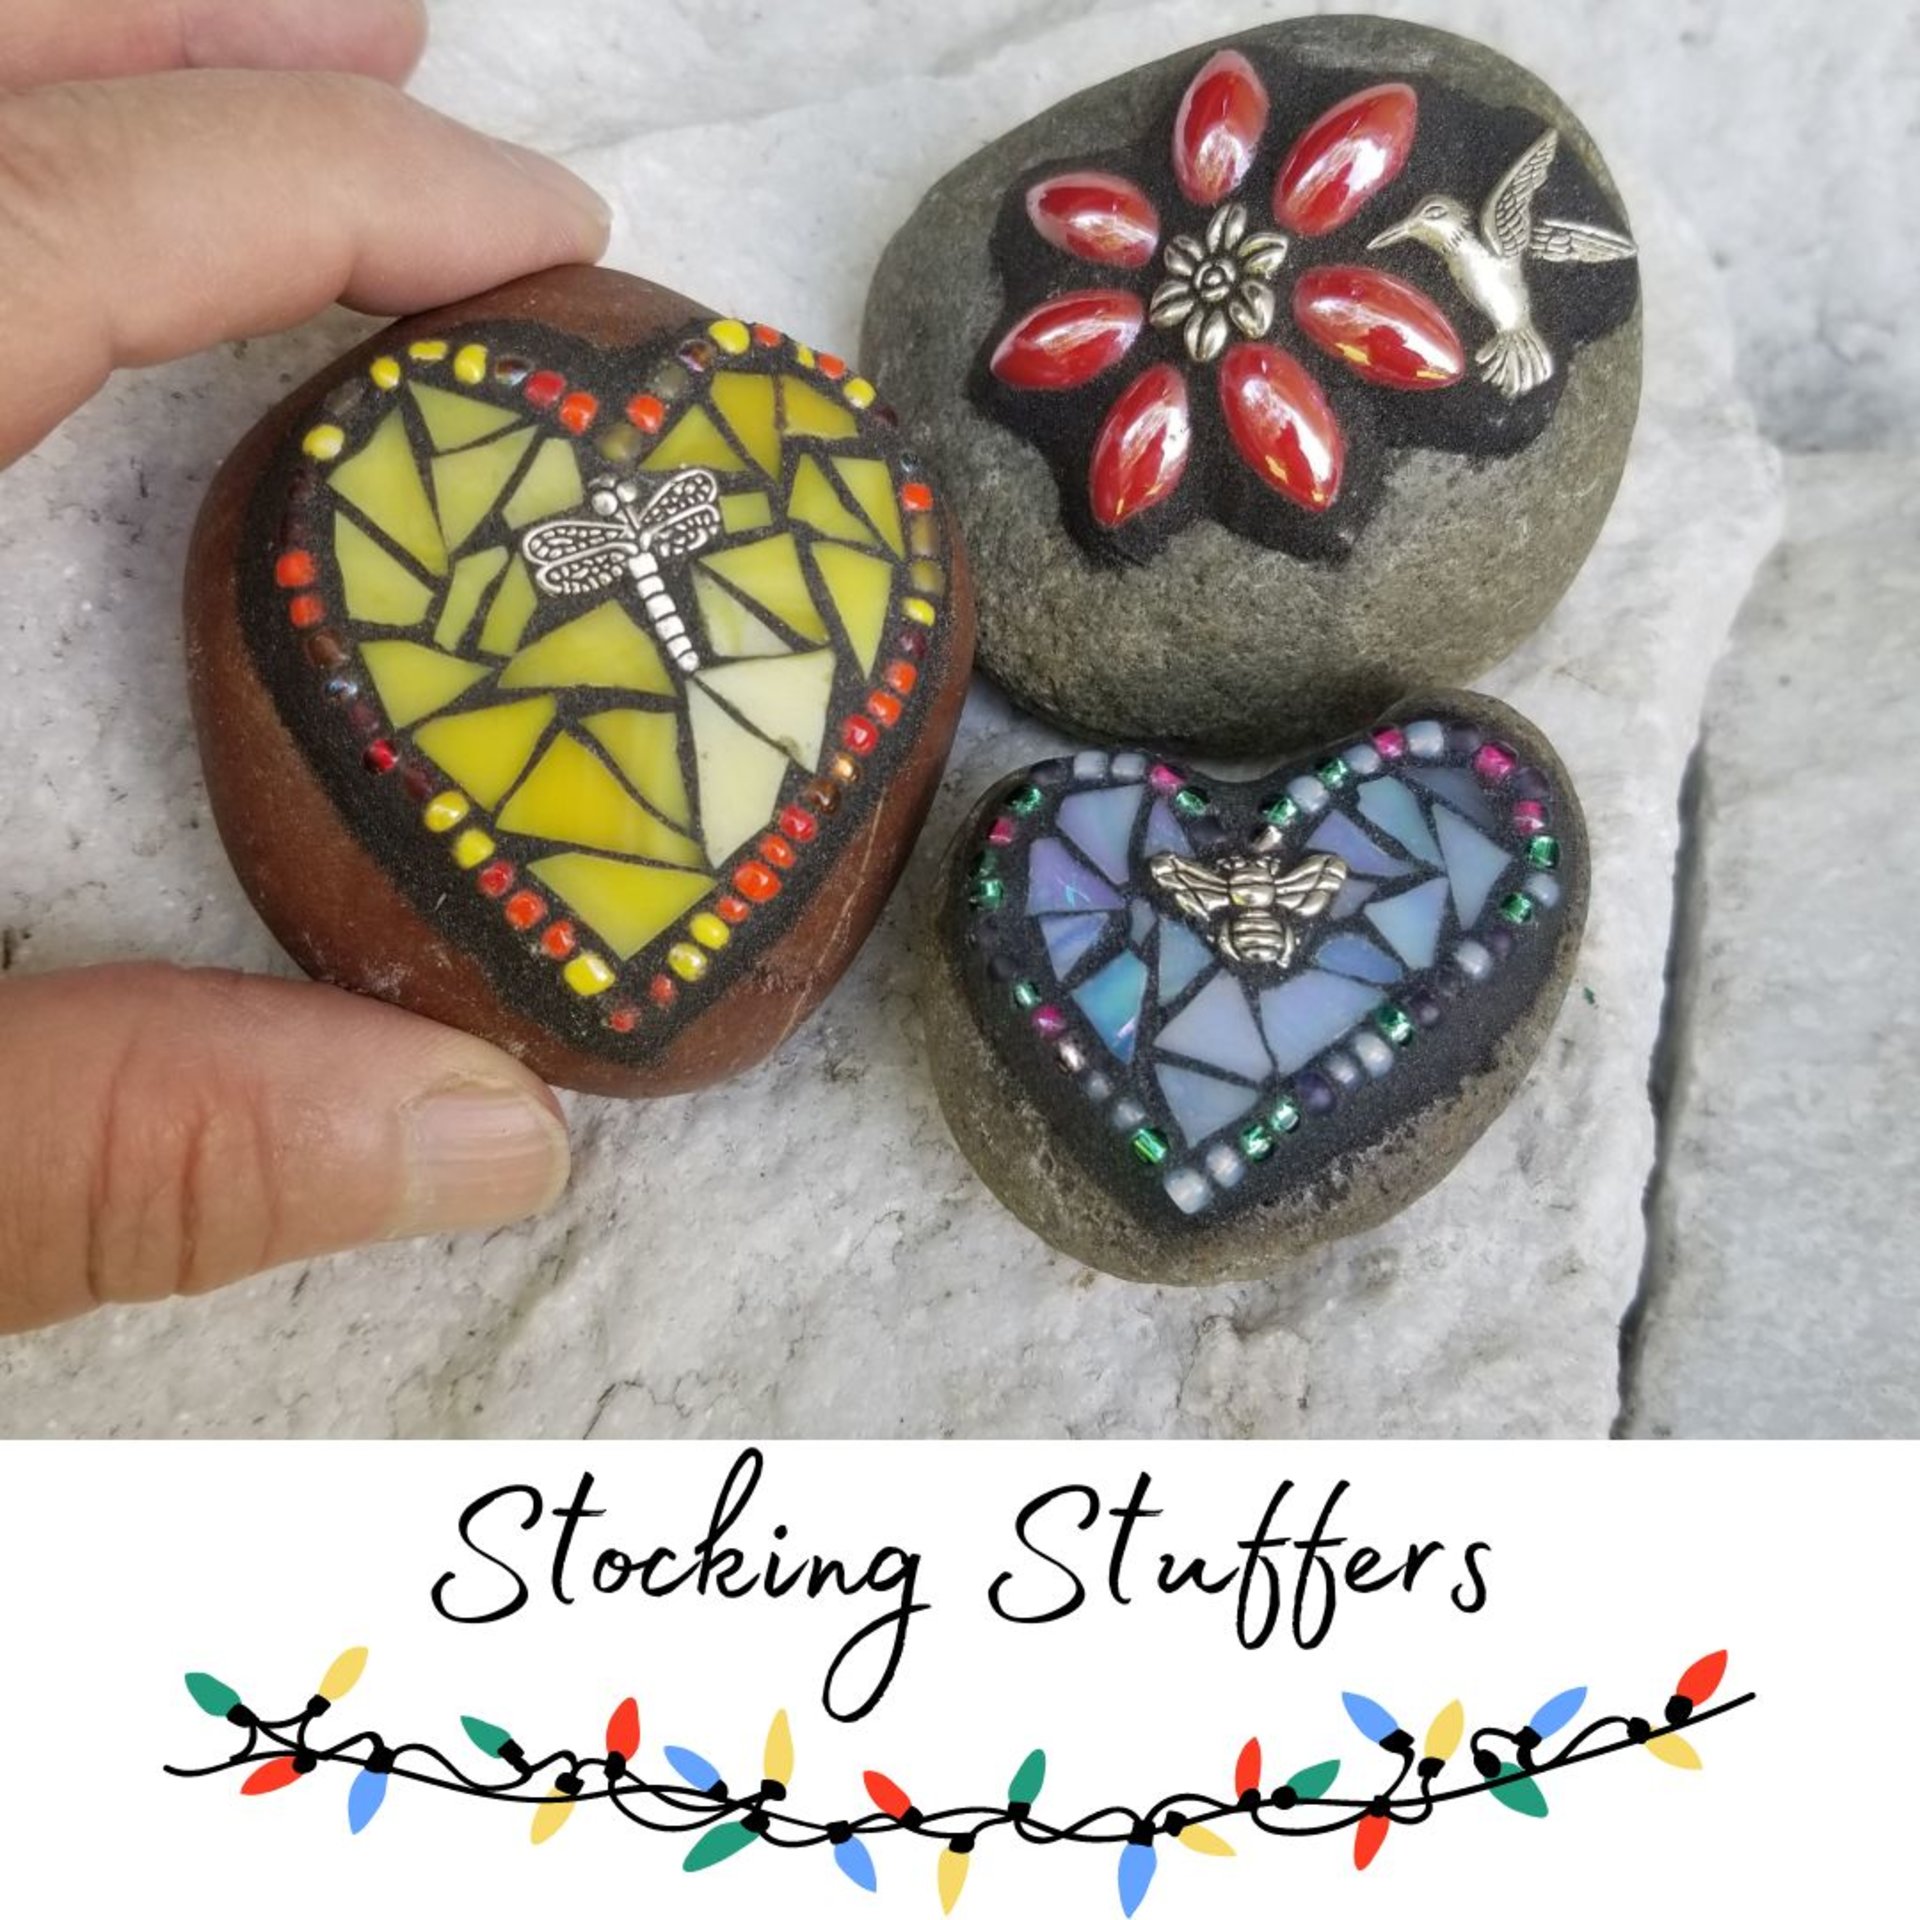 Mosaic Garden Stone Paperweights, Secret Santa Stocking Stuffer, #1 Group Mosaic Heart and Rocks 